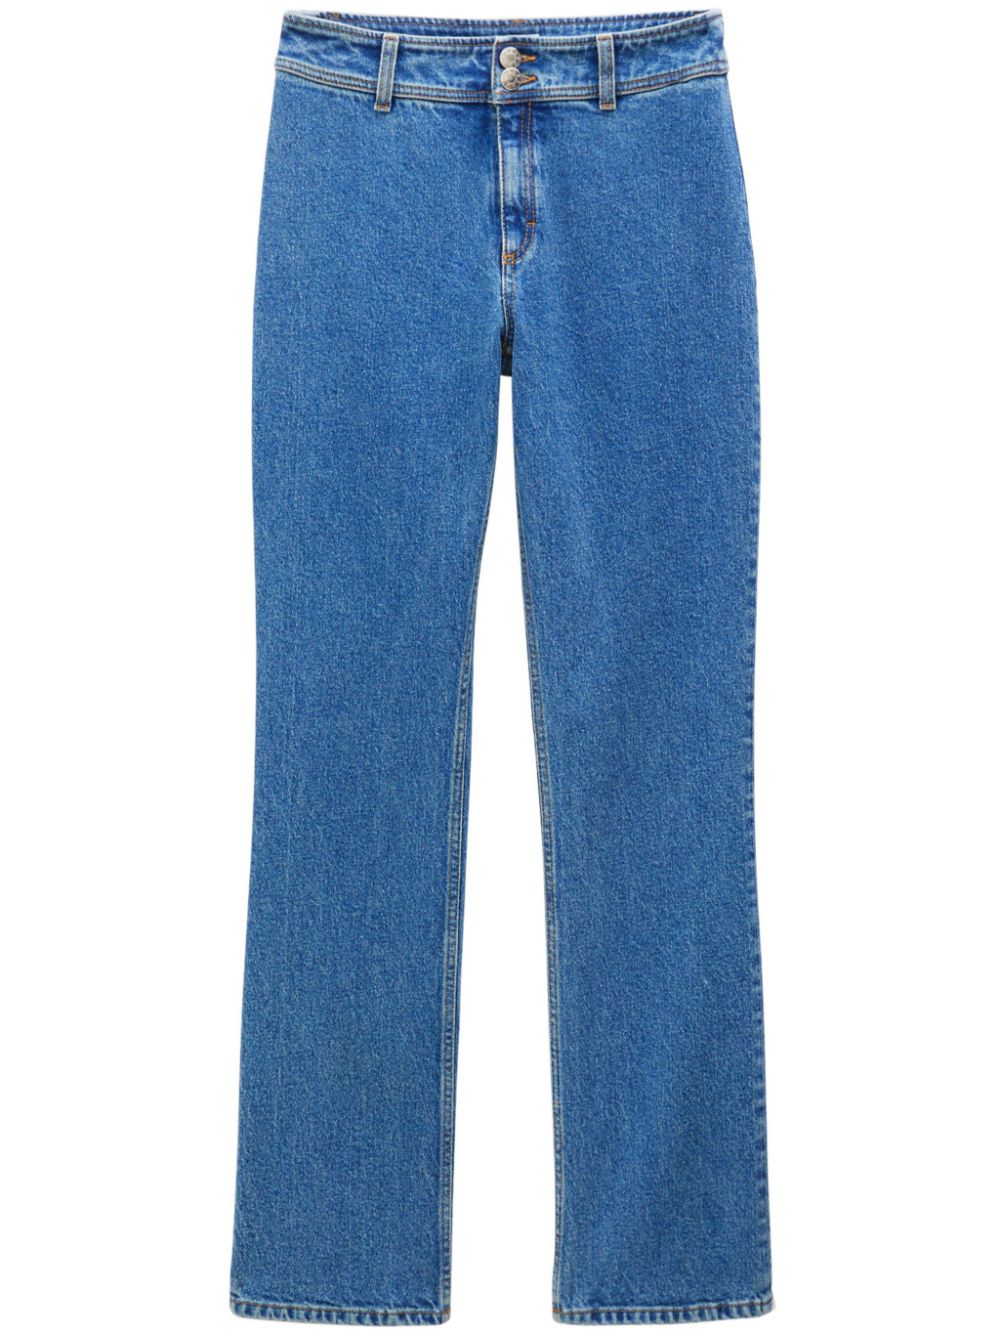 90s stretch straight-leg jeans